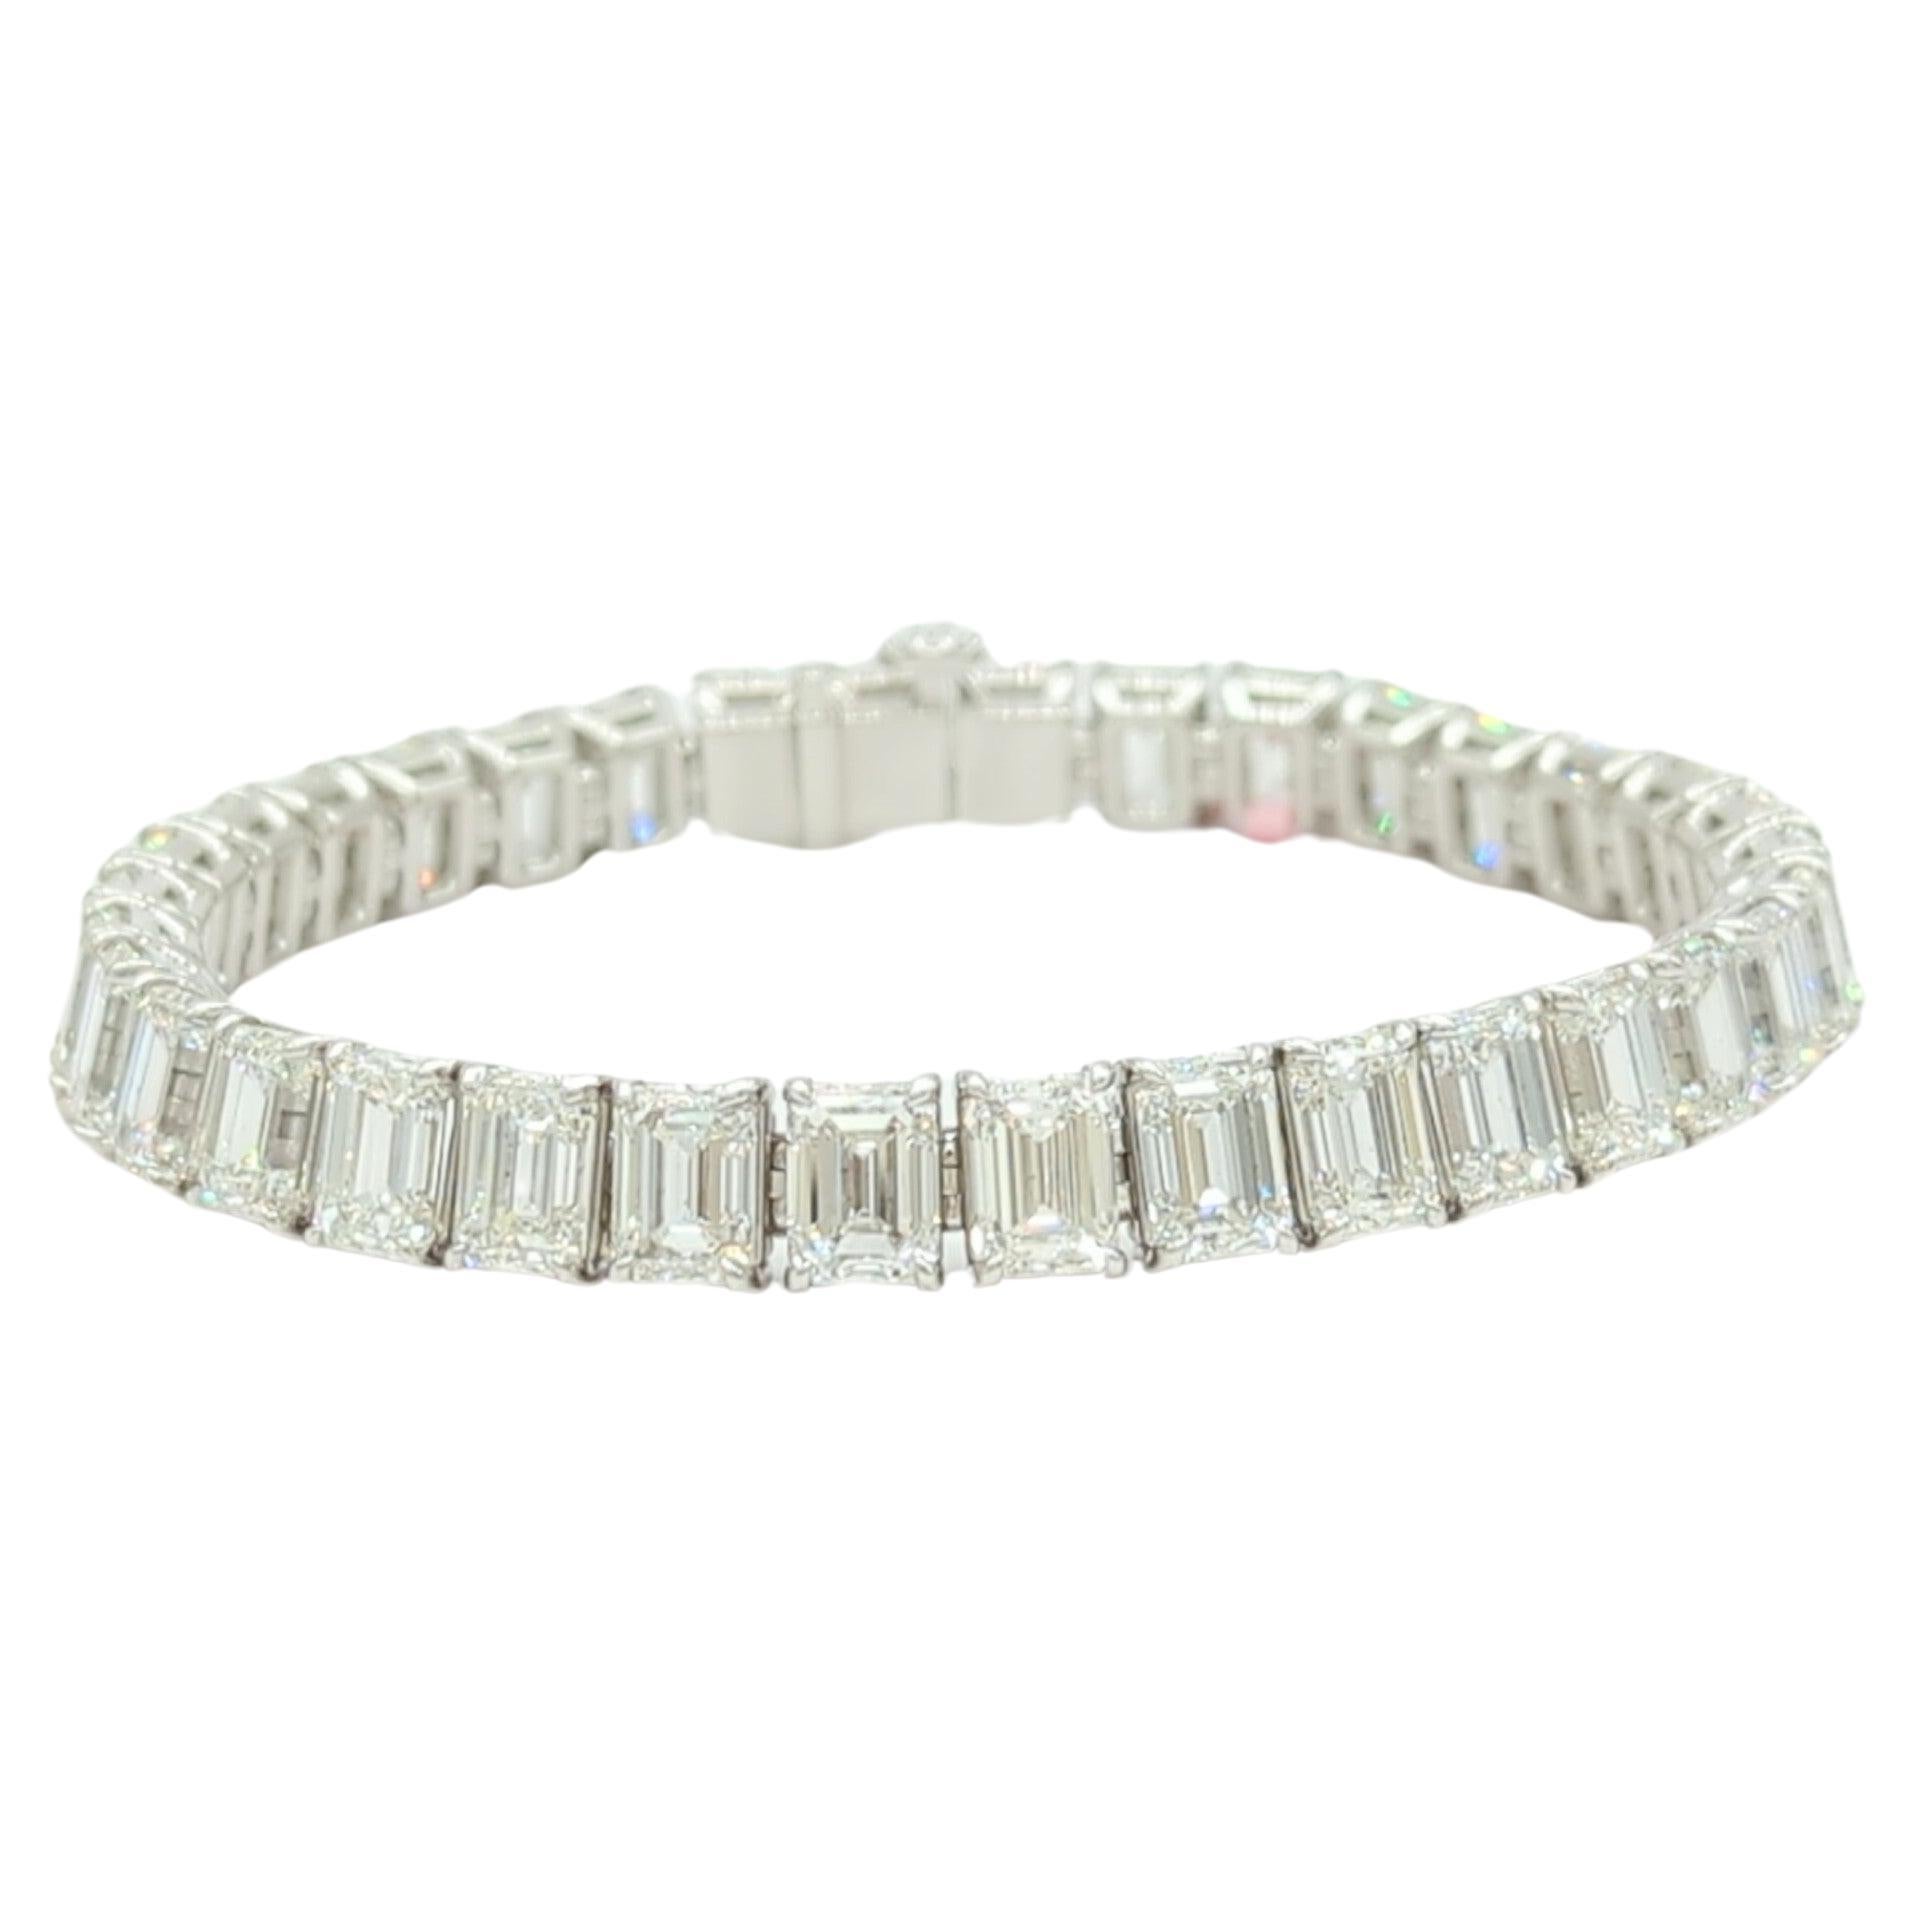 GIA 1 Carat Each Emerald Cut White Diamond Tennis Bracelet in 18K White Gold For Sale